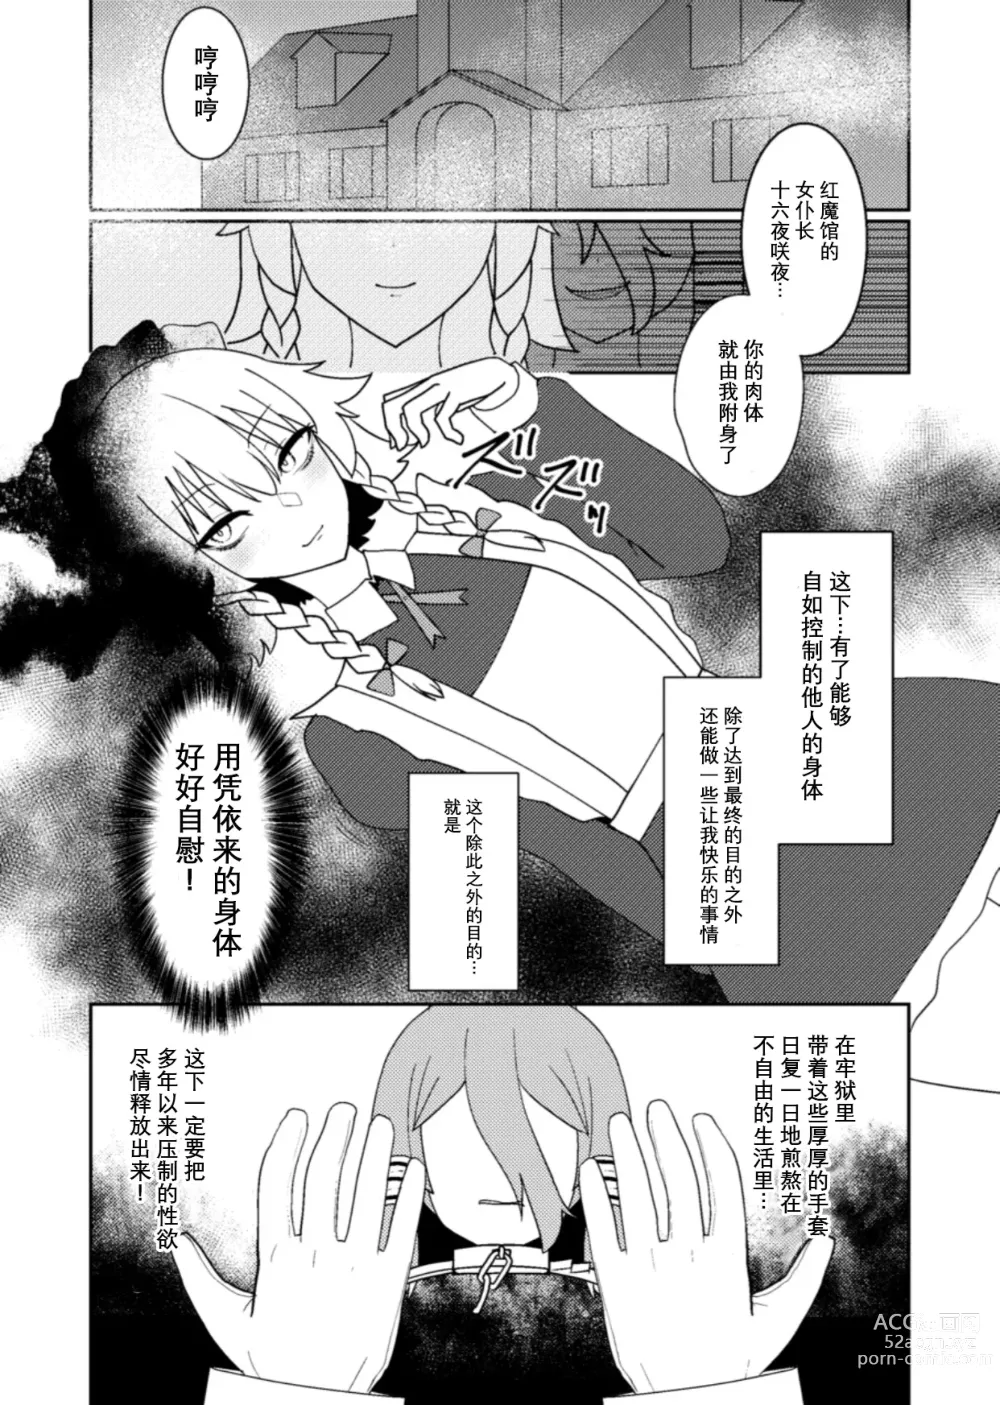 Page 3 of doujinshi 宫出口瑞灵的凭依自慰记录